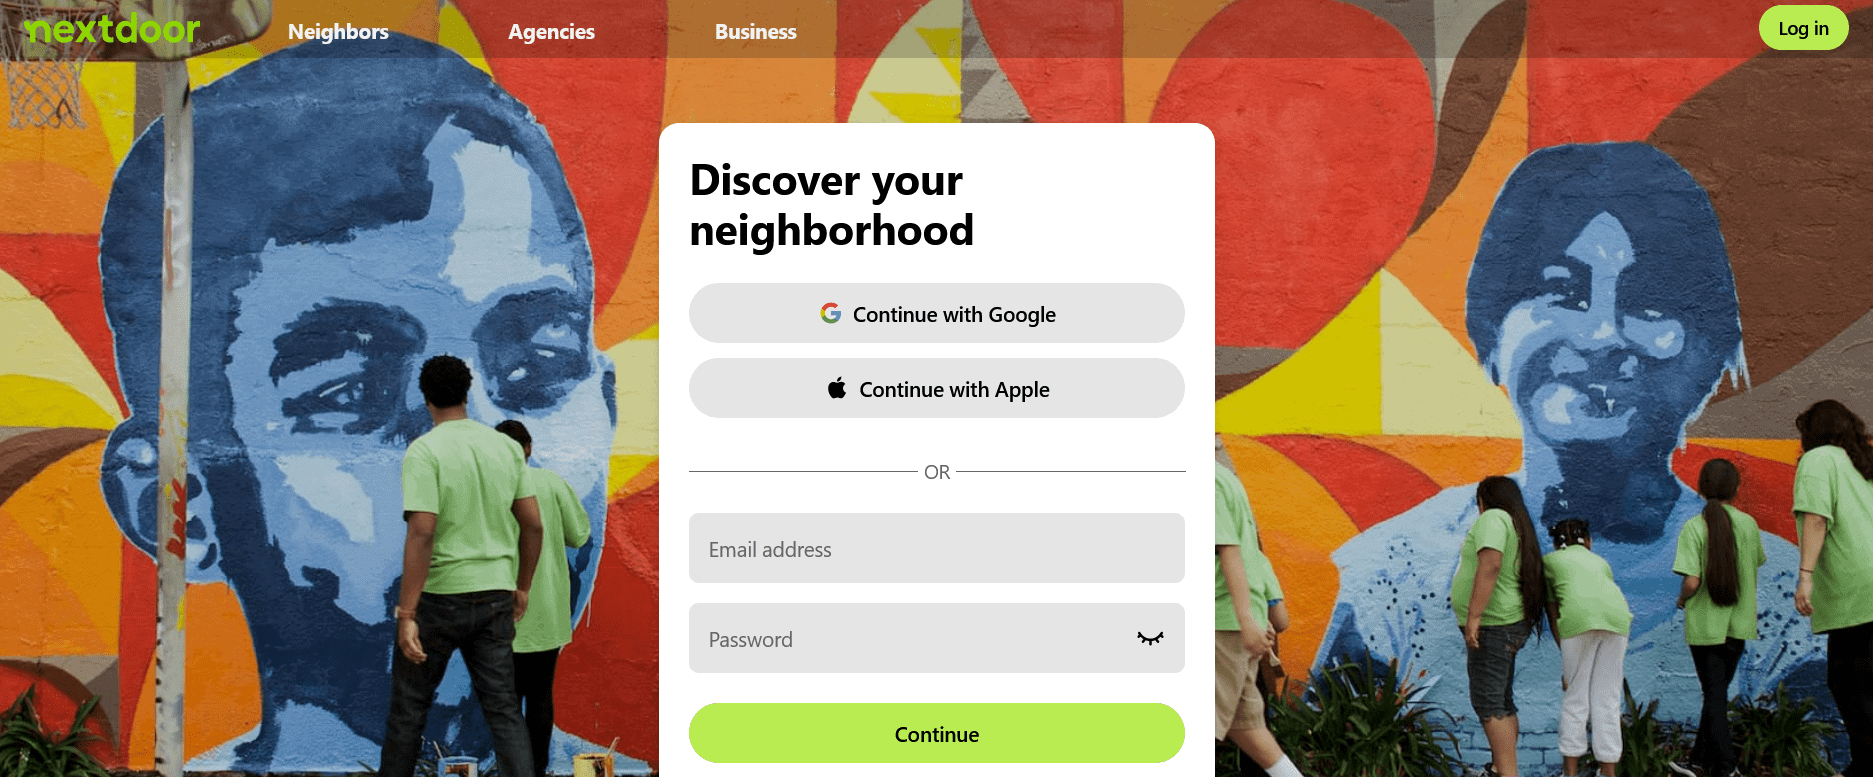 Nextdoor - An Alternative App Similar to Craigslist